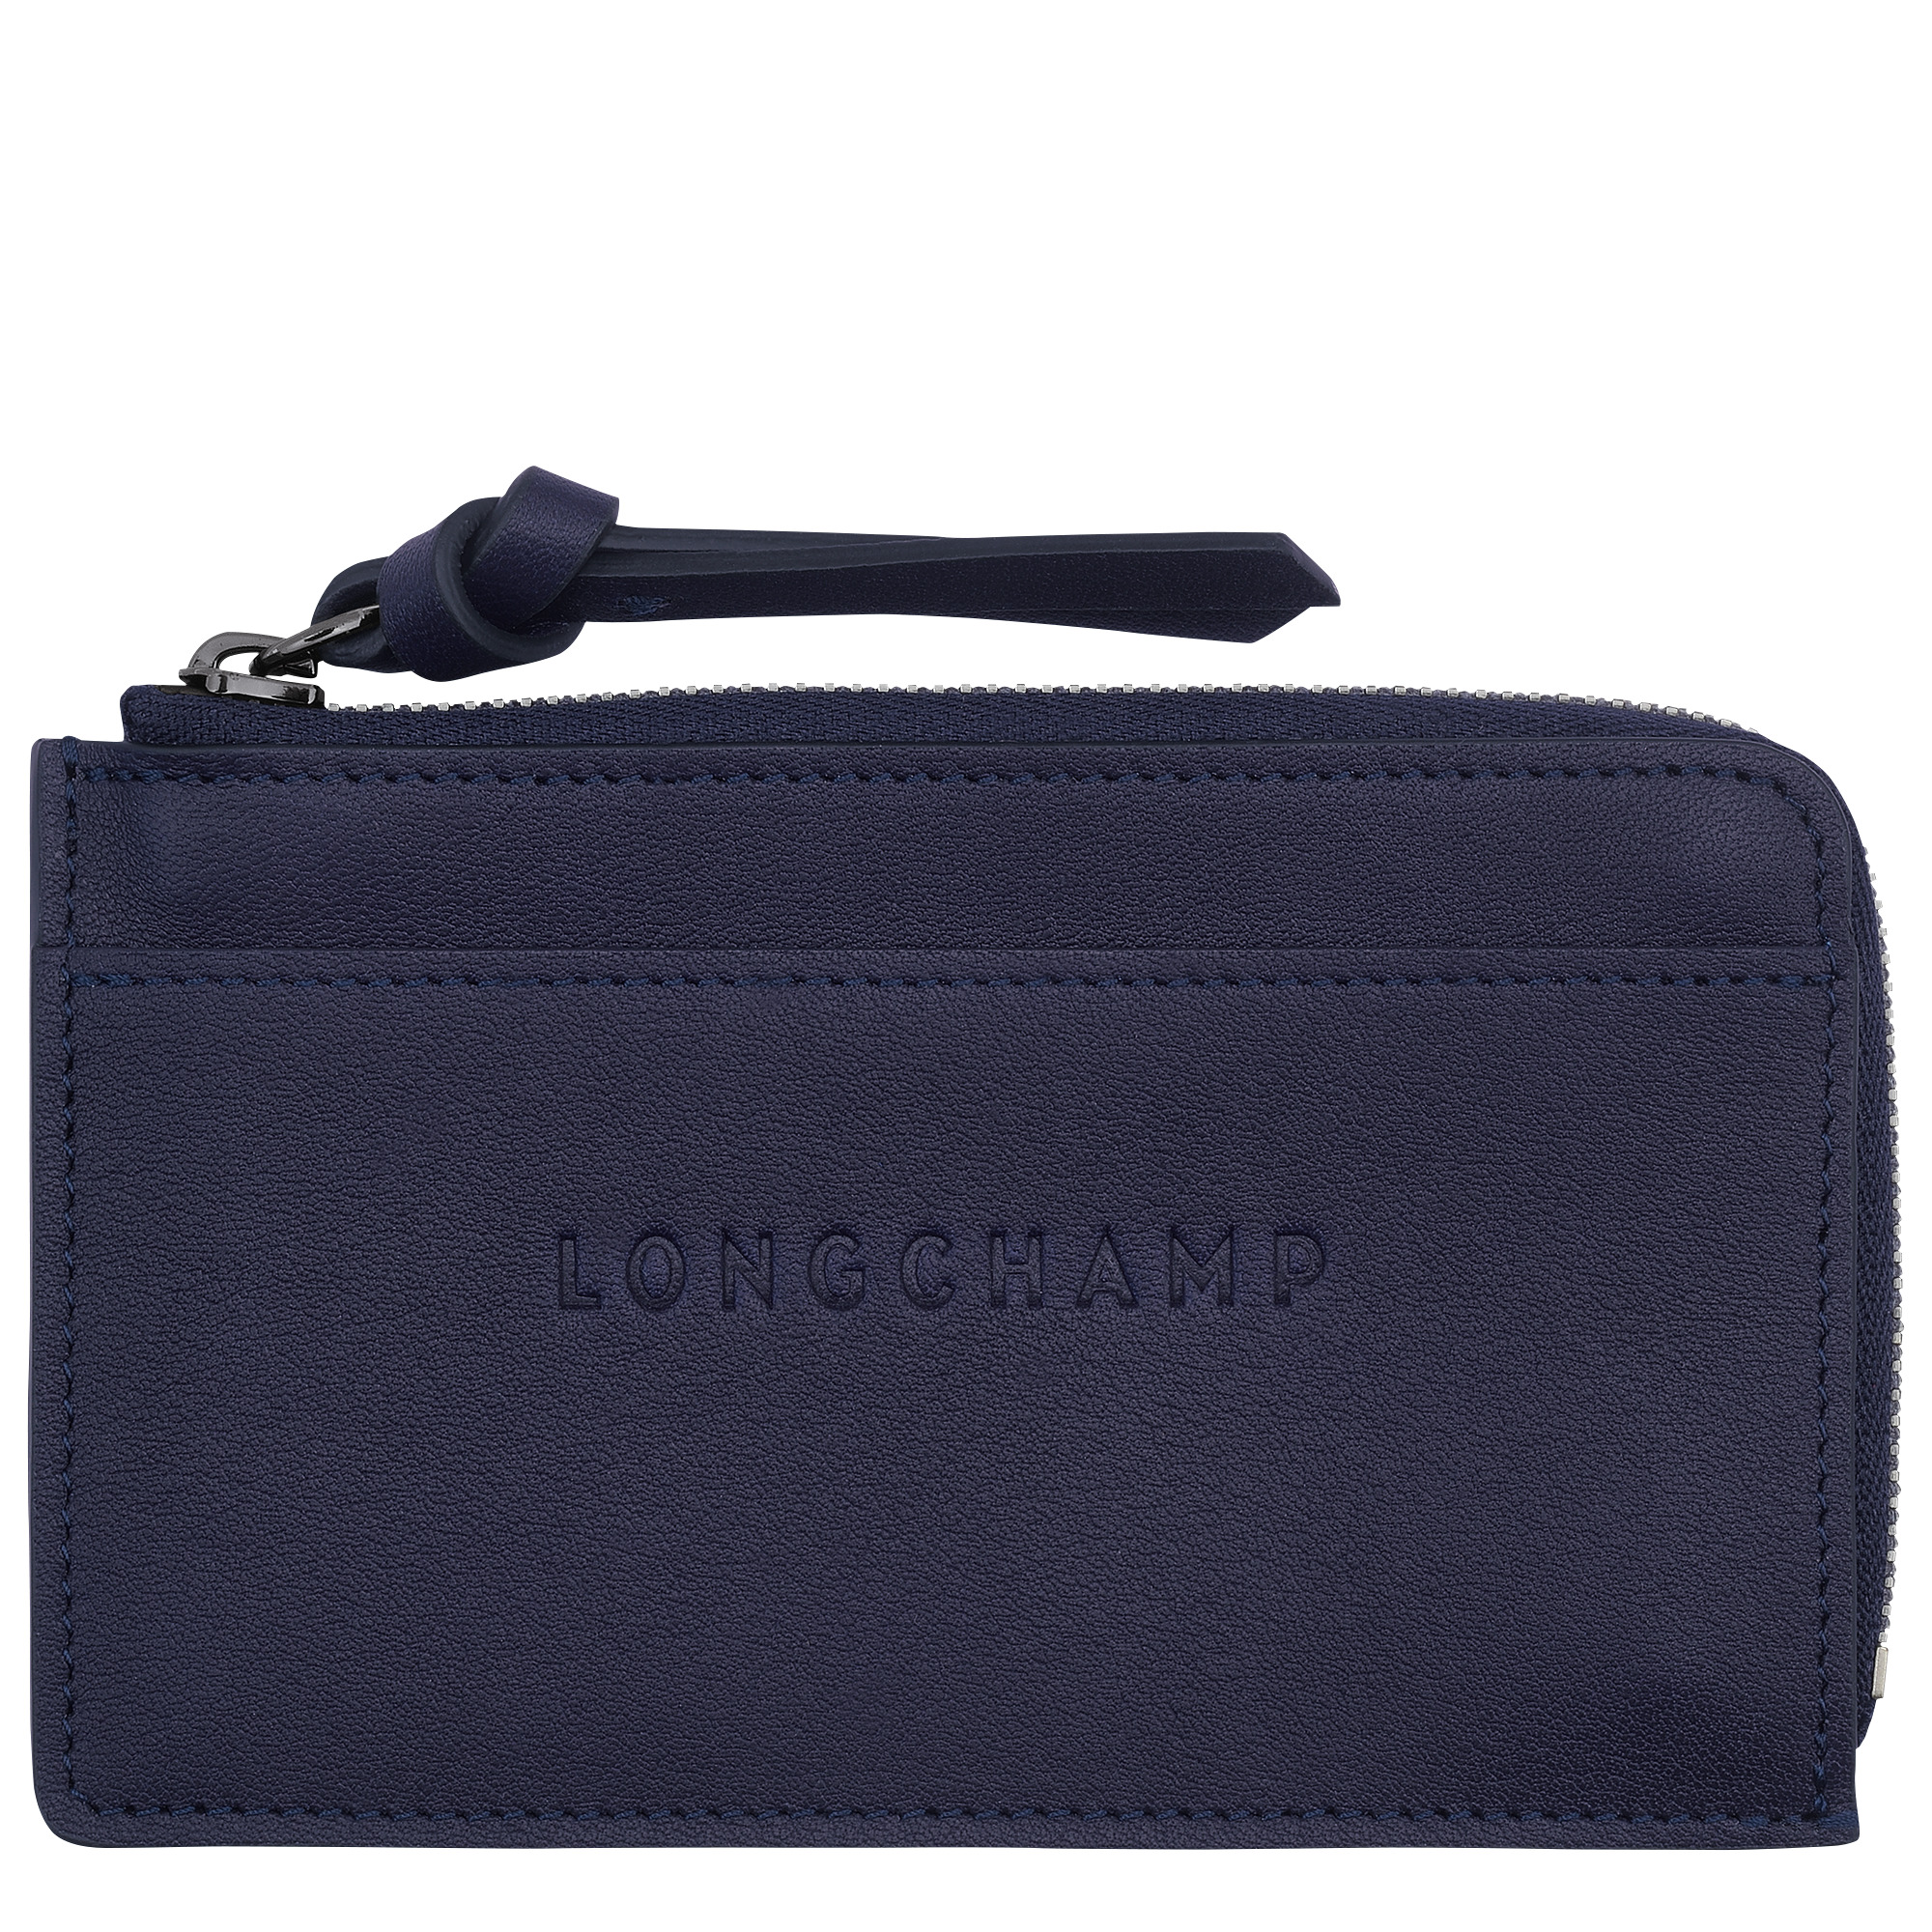 Longchamp 3D Card holder Bilberry - Leather - 1